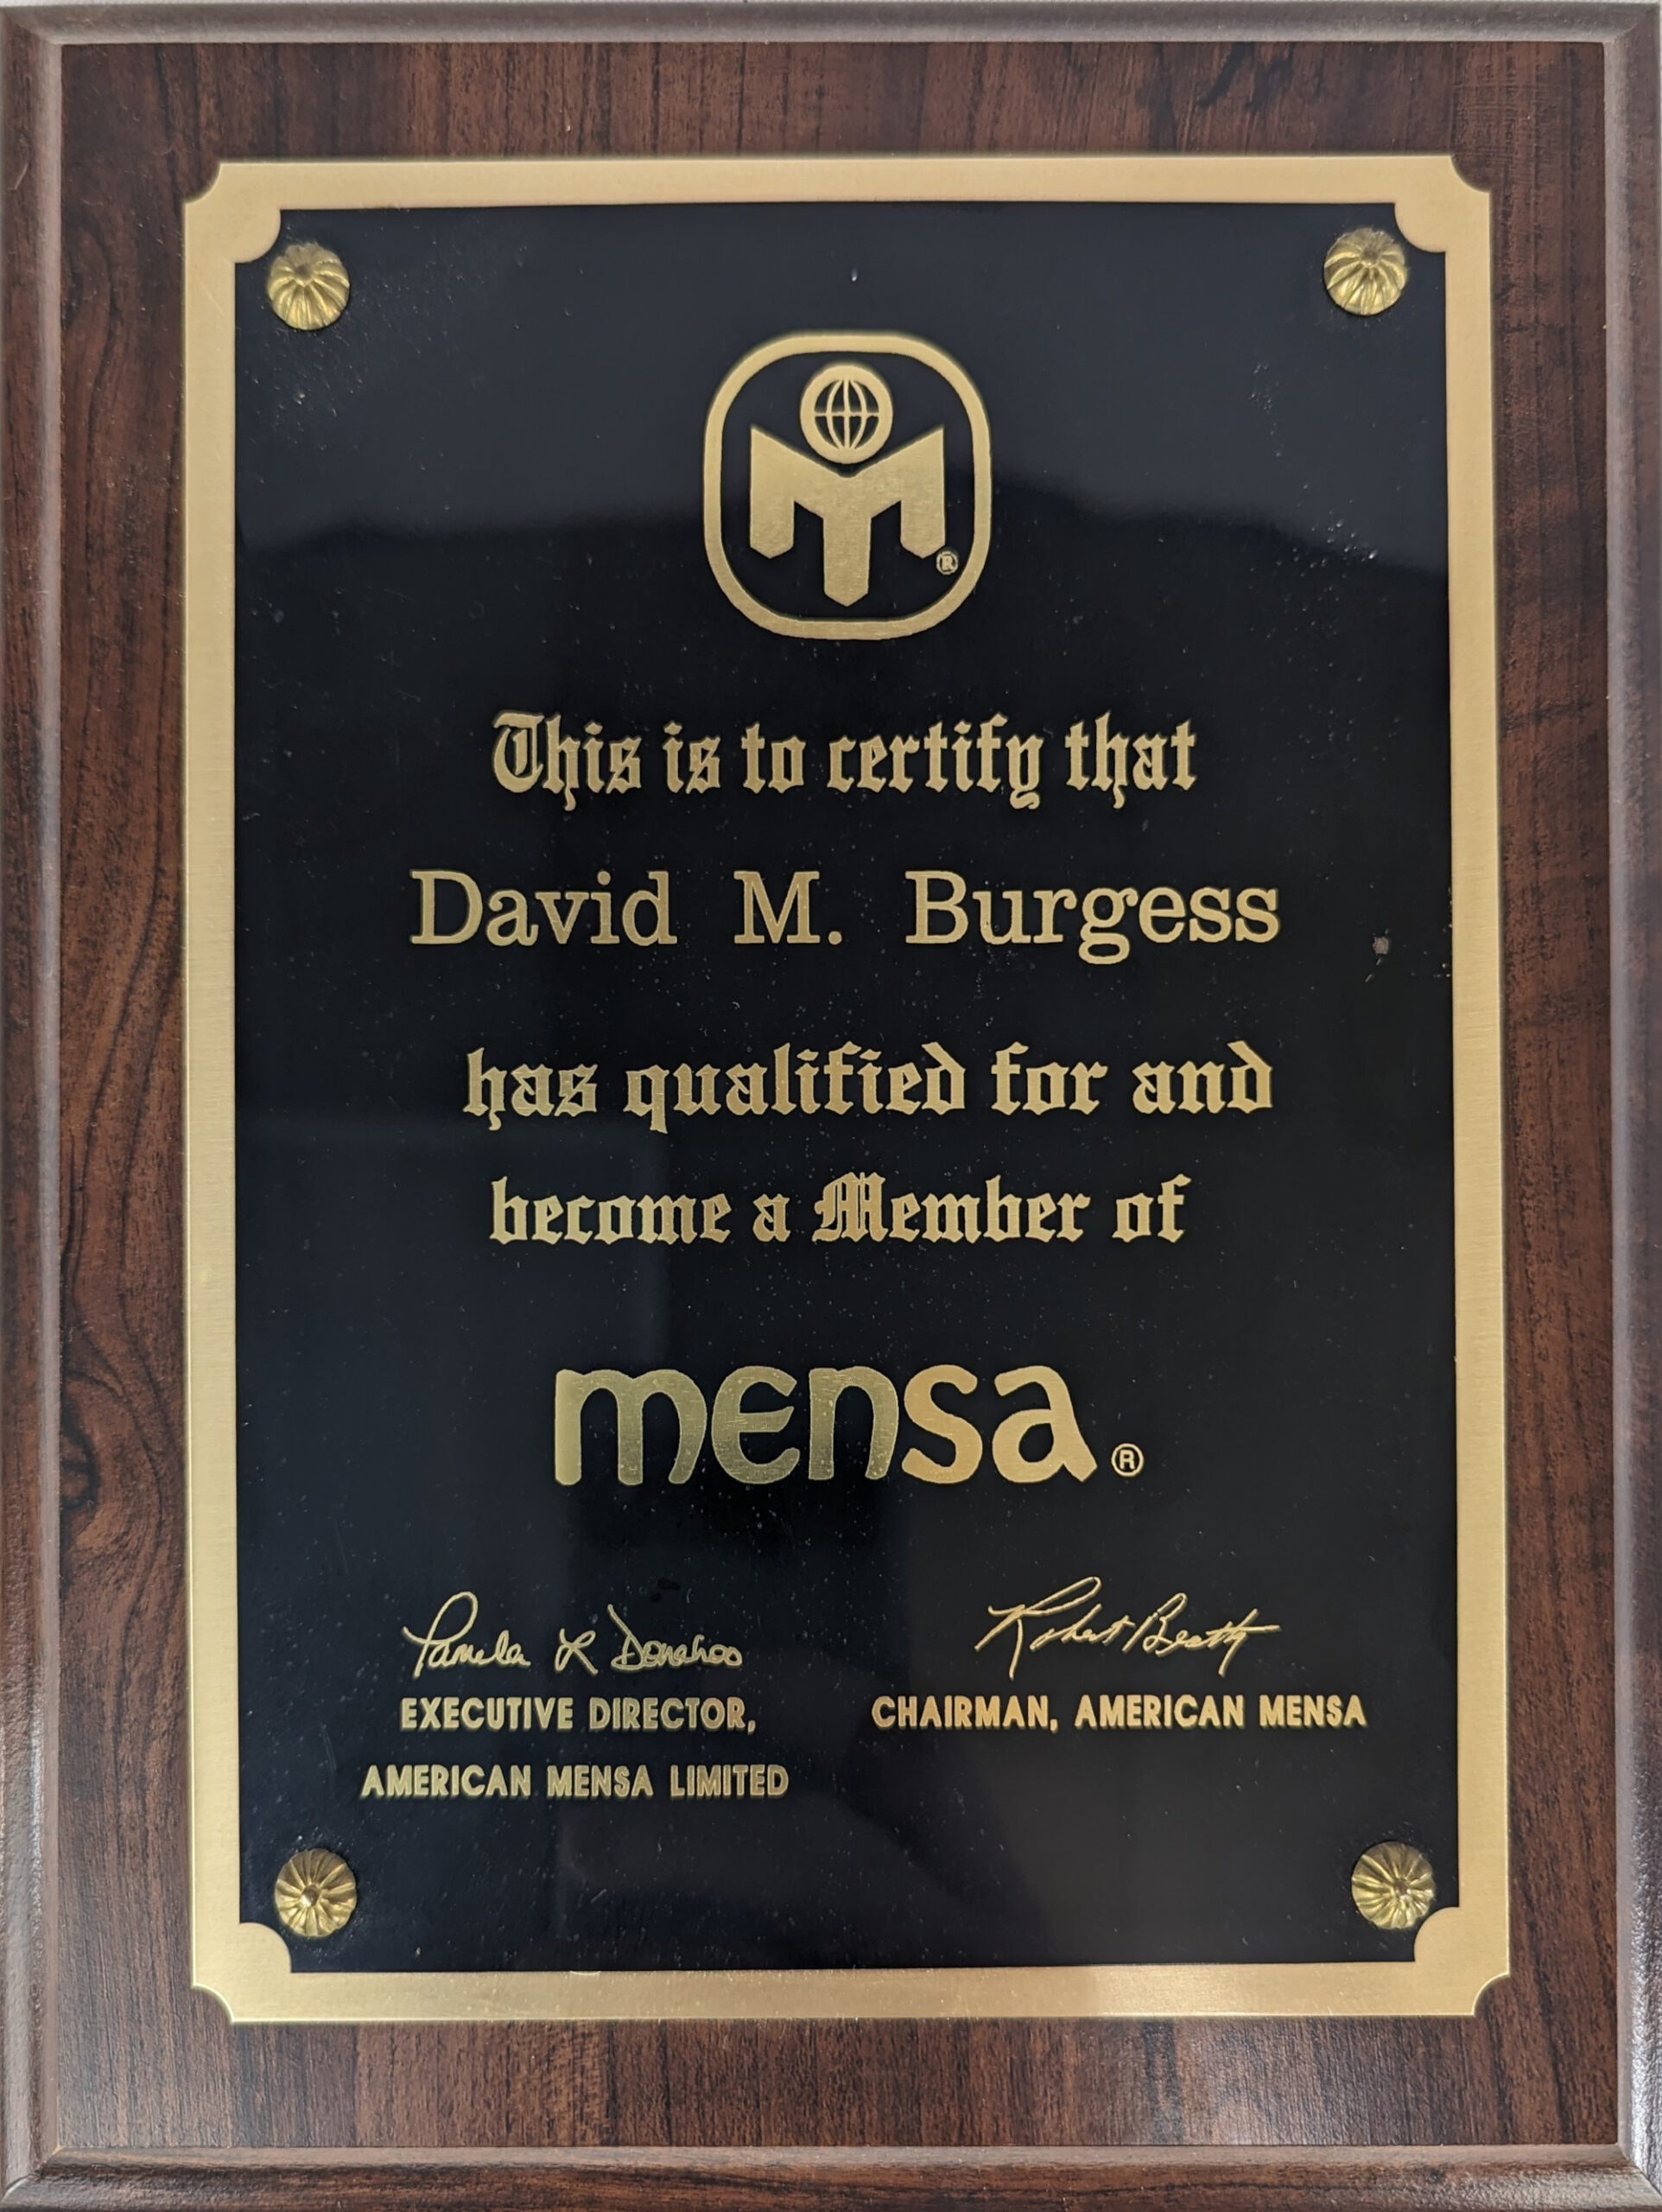 I am a Mensa Member